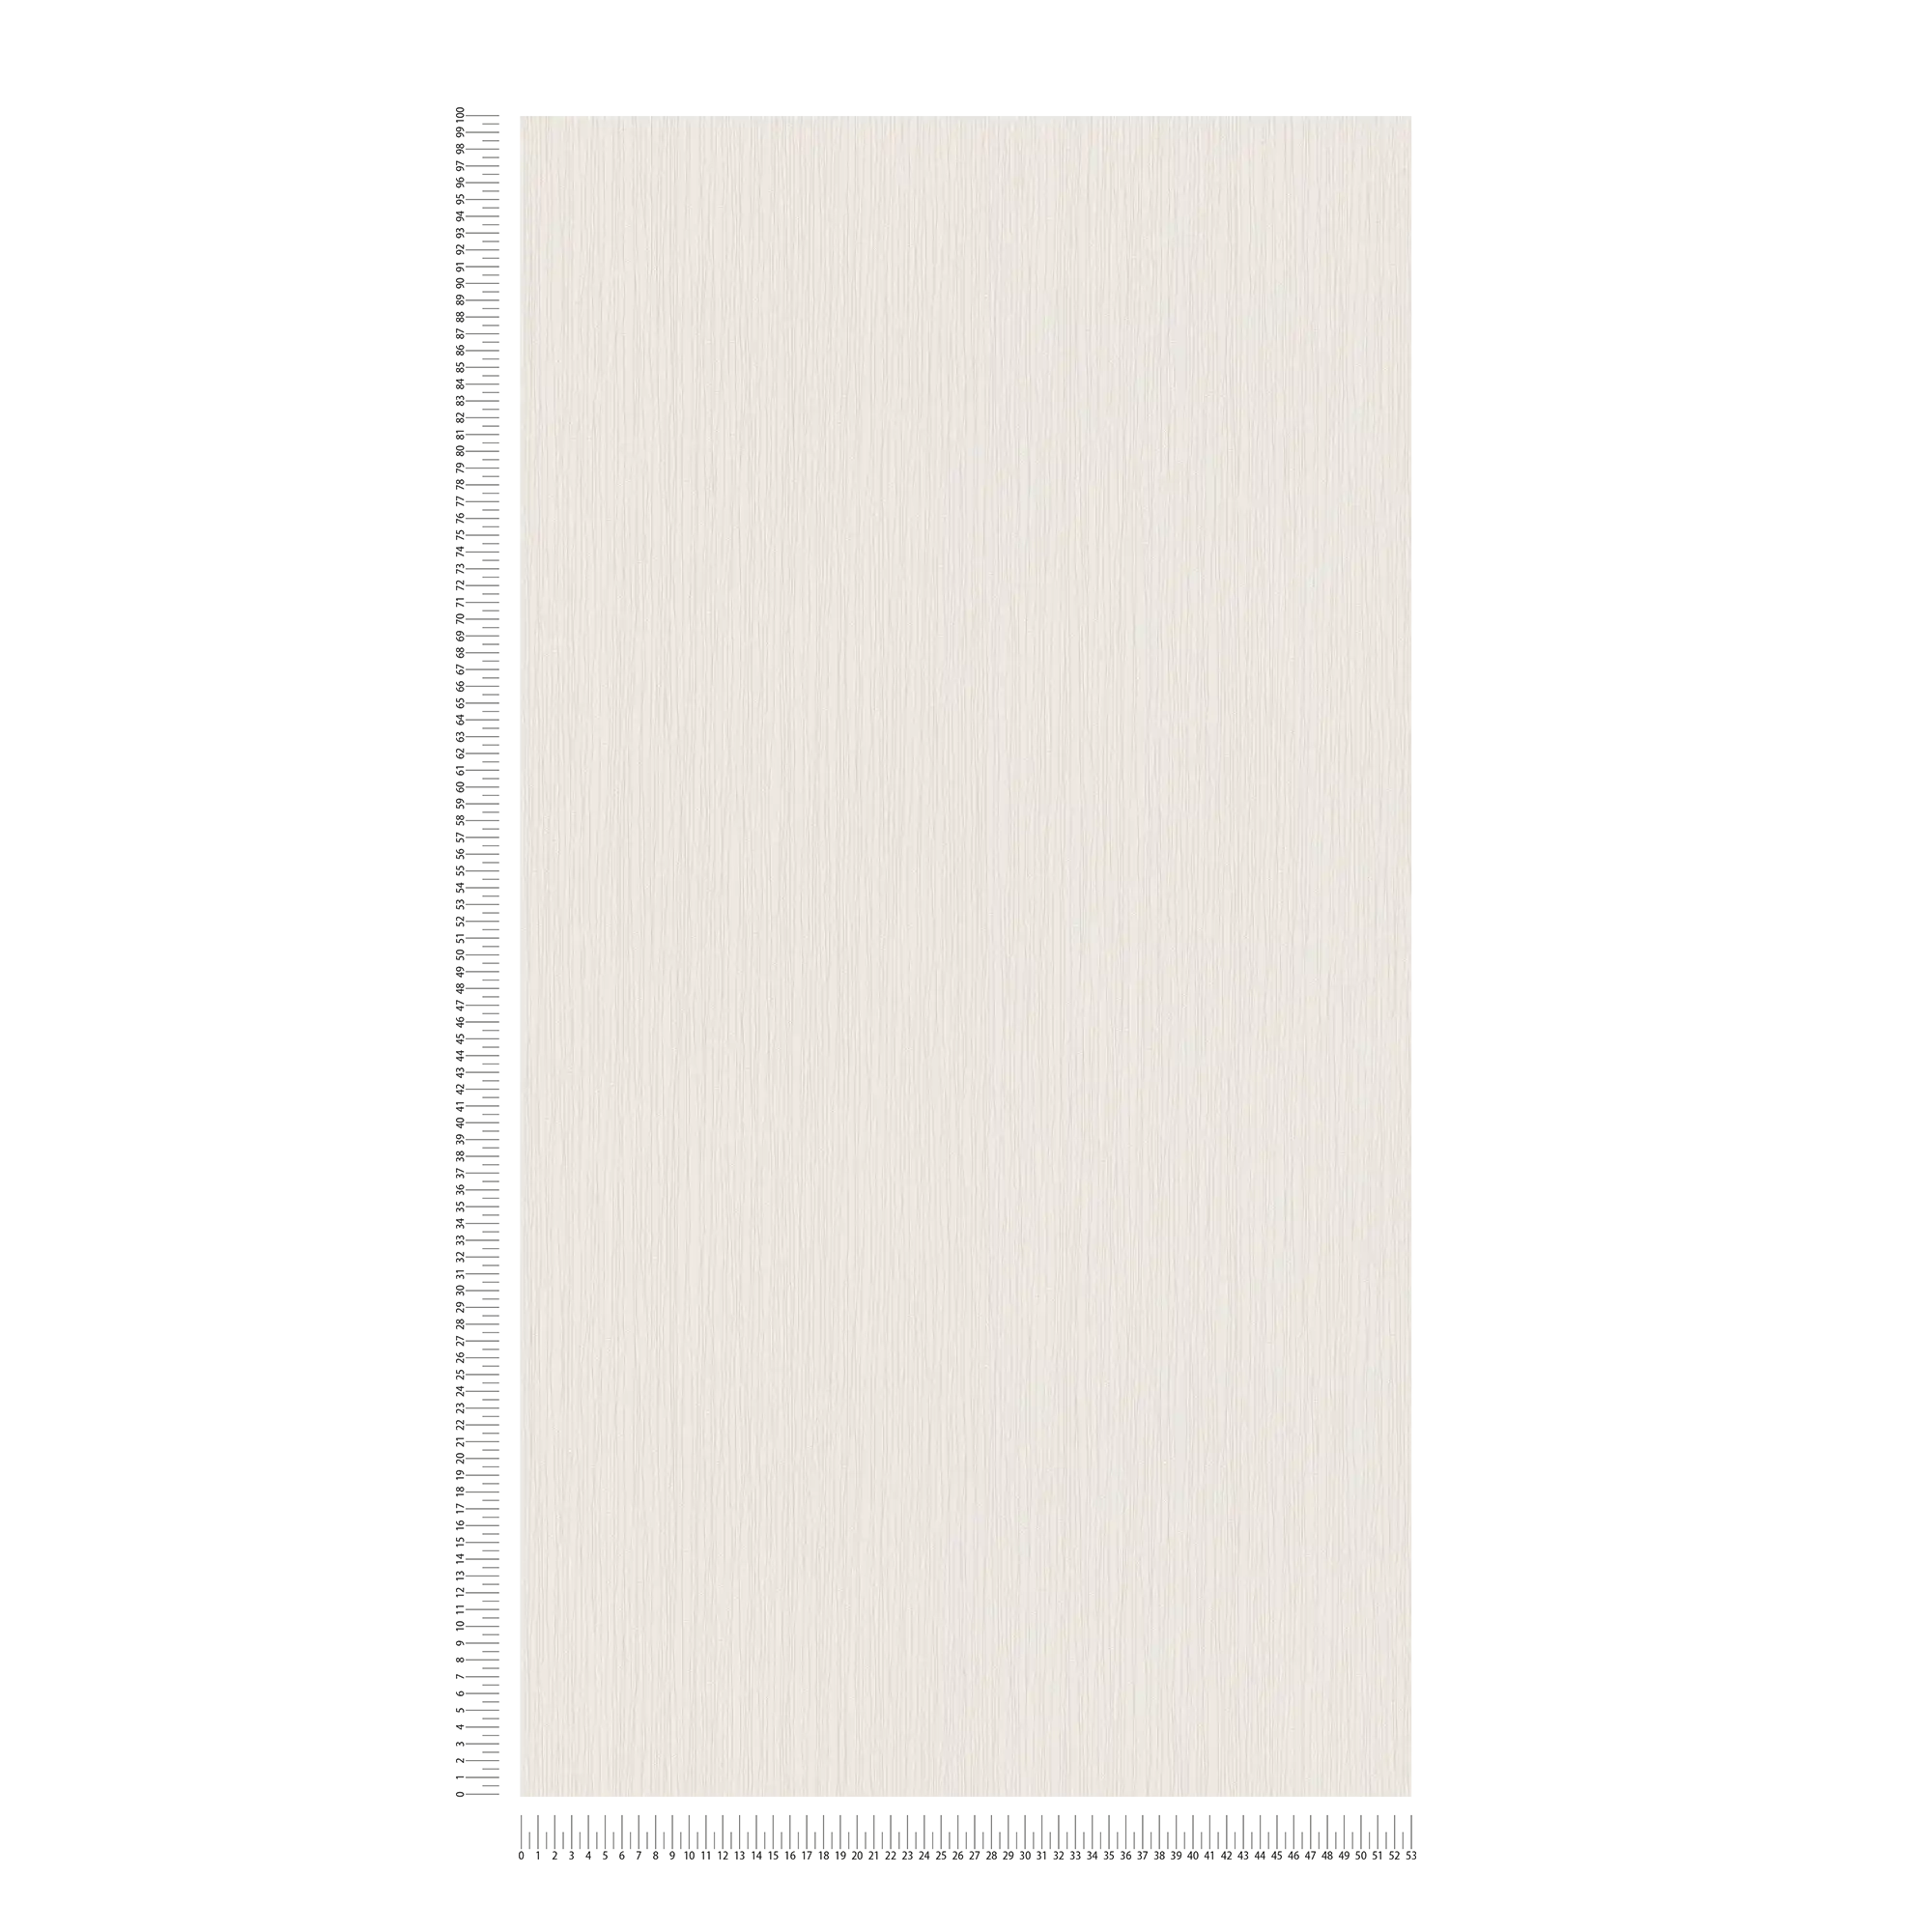             Plain wallpaper with texture pattern & line design - cream
        